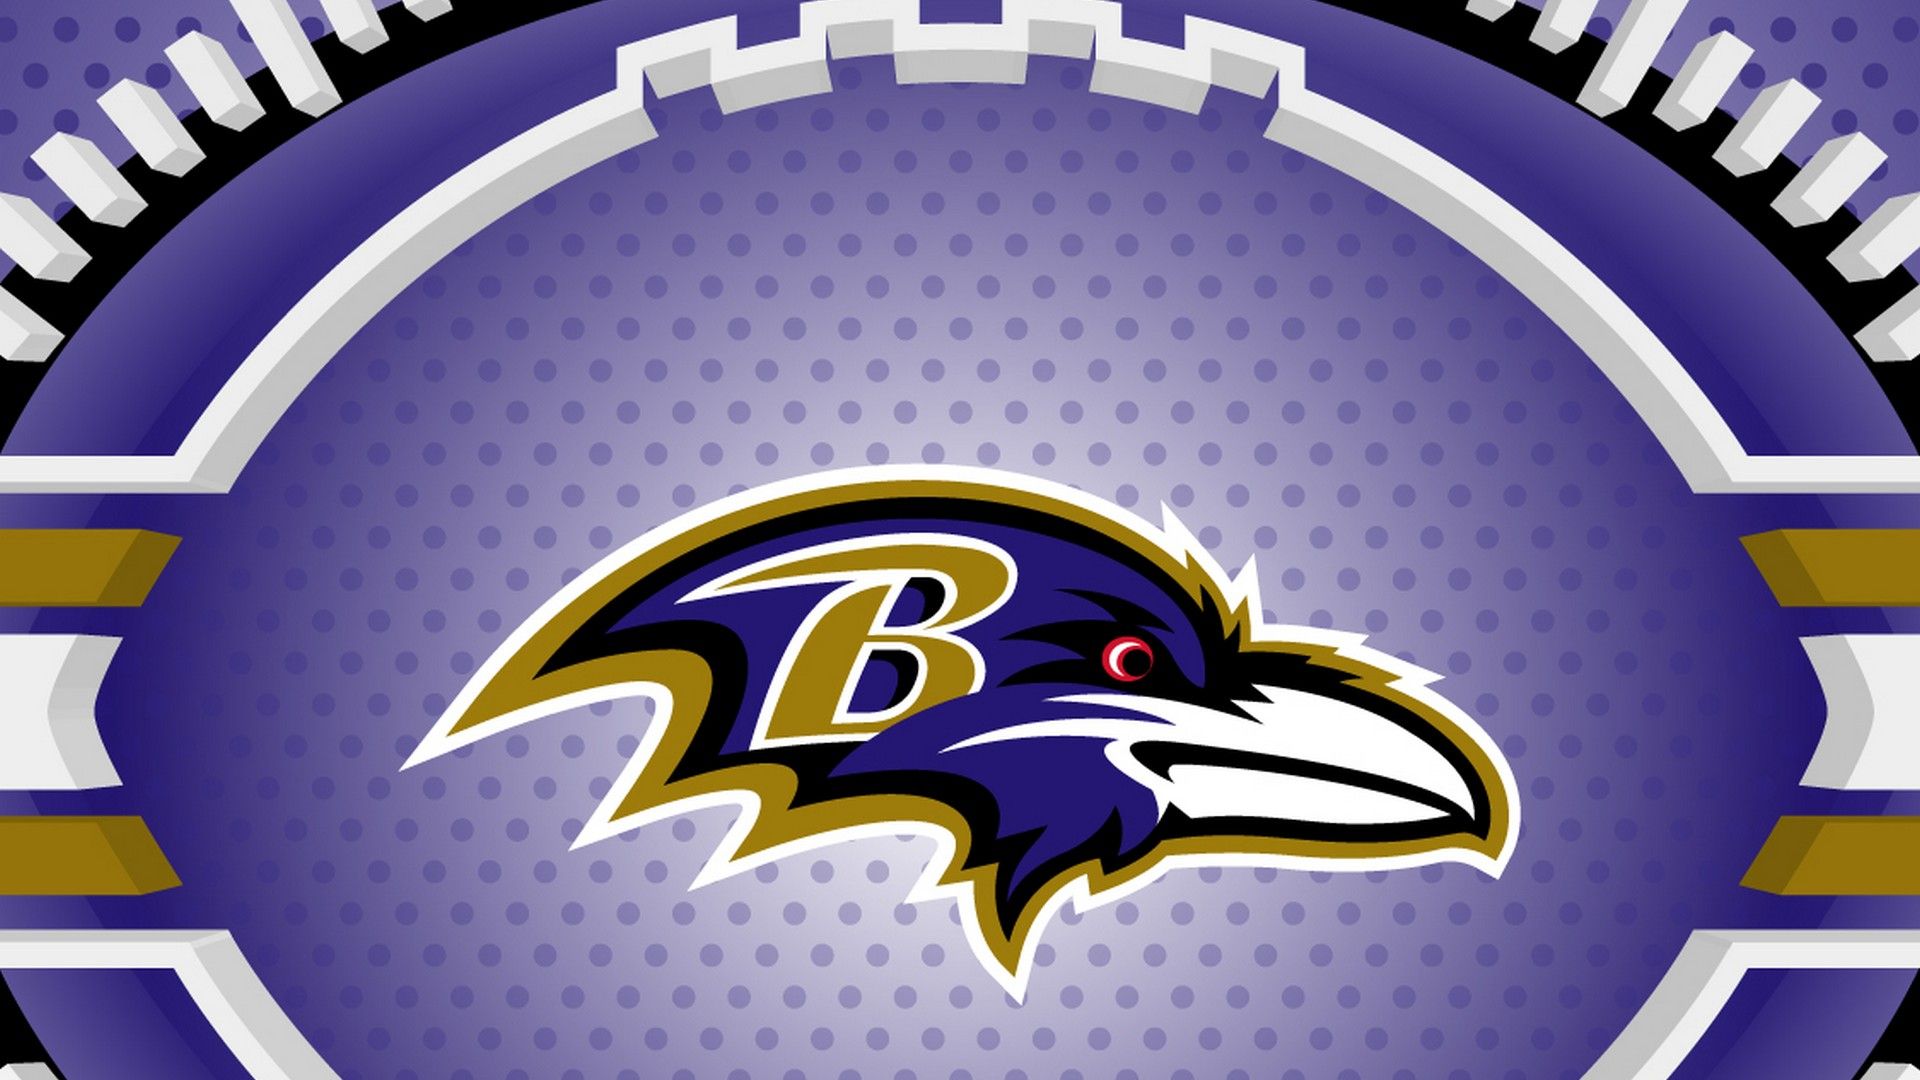 Baltimore Ravens Wallpaper For Mac Background NFL Football Wallpaper. Baltimore ravens logo, Baltimore ravens wallpaper, Baltimore ravens